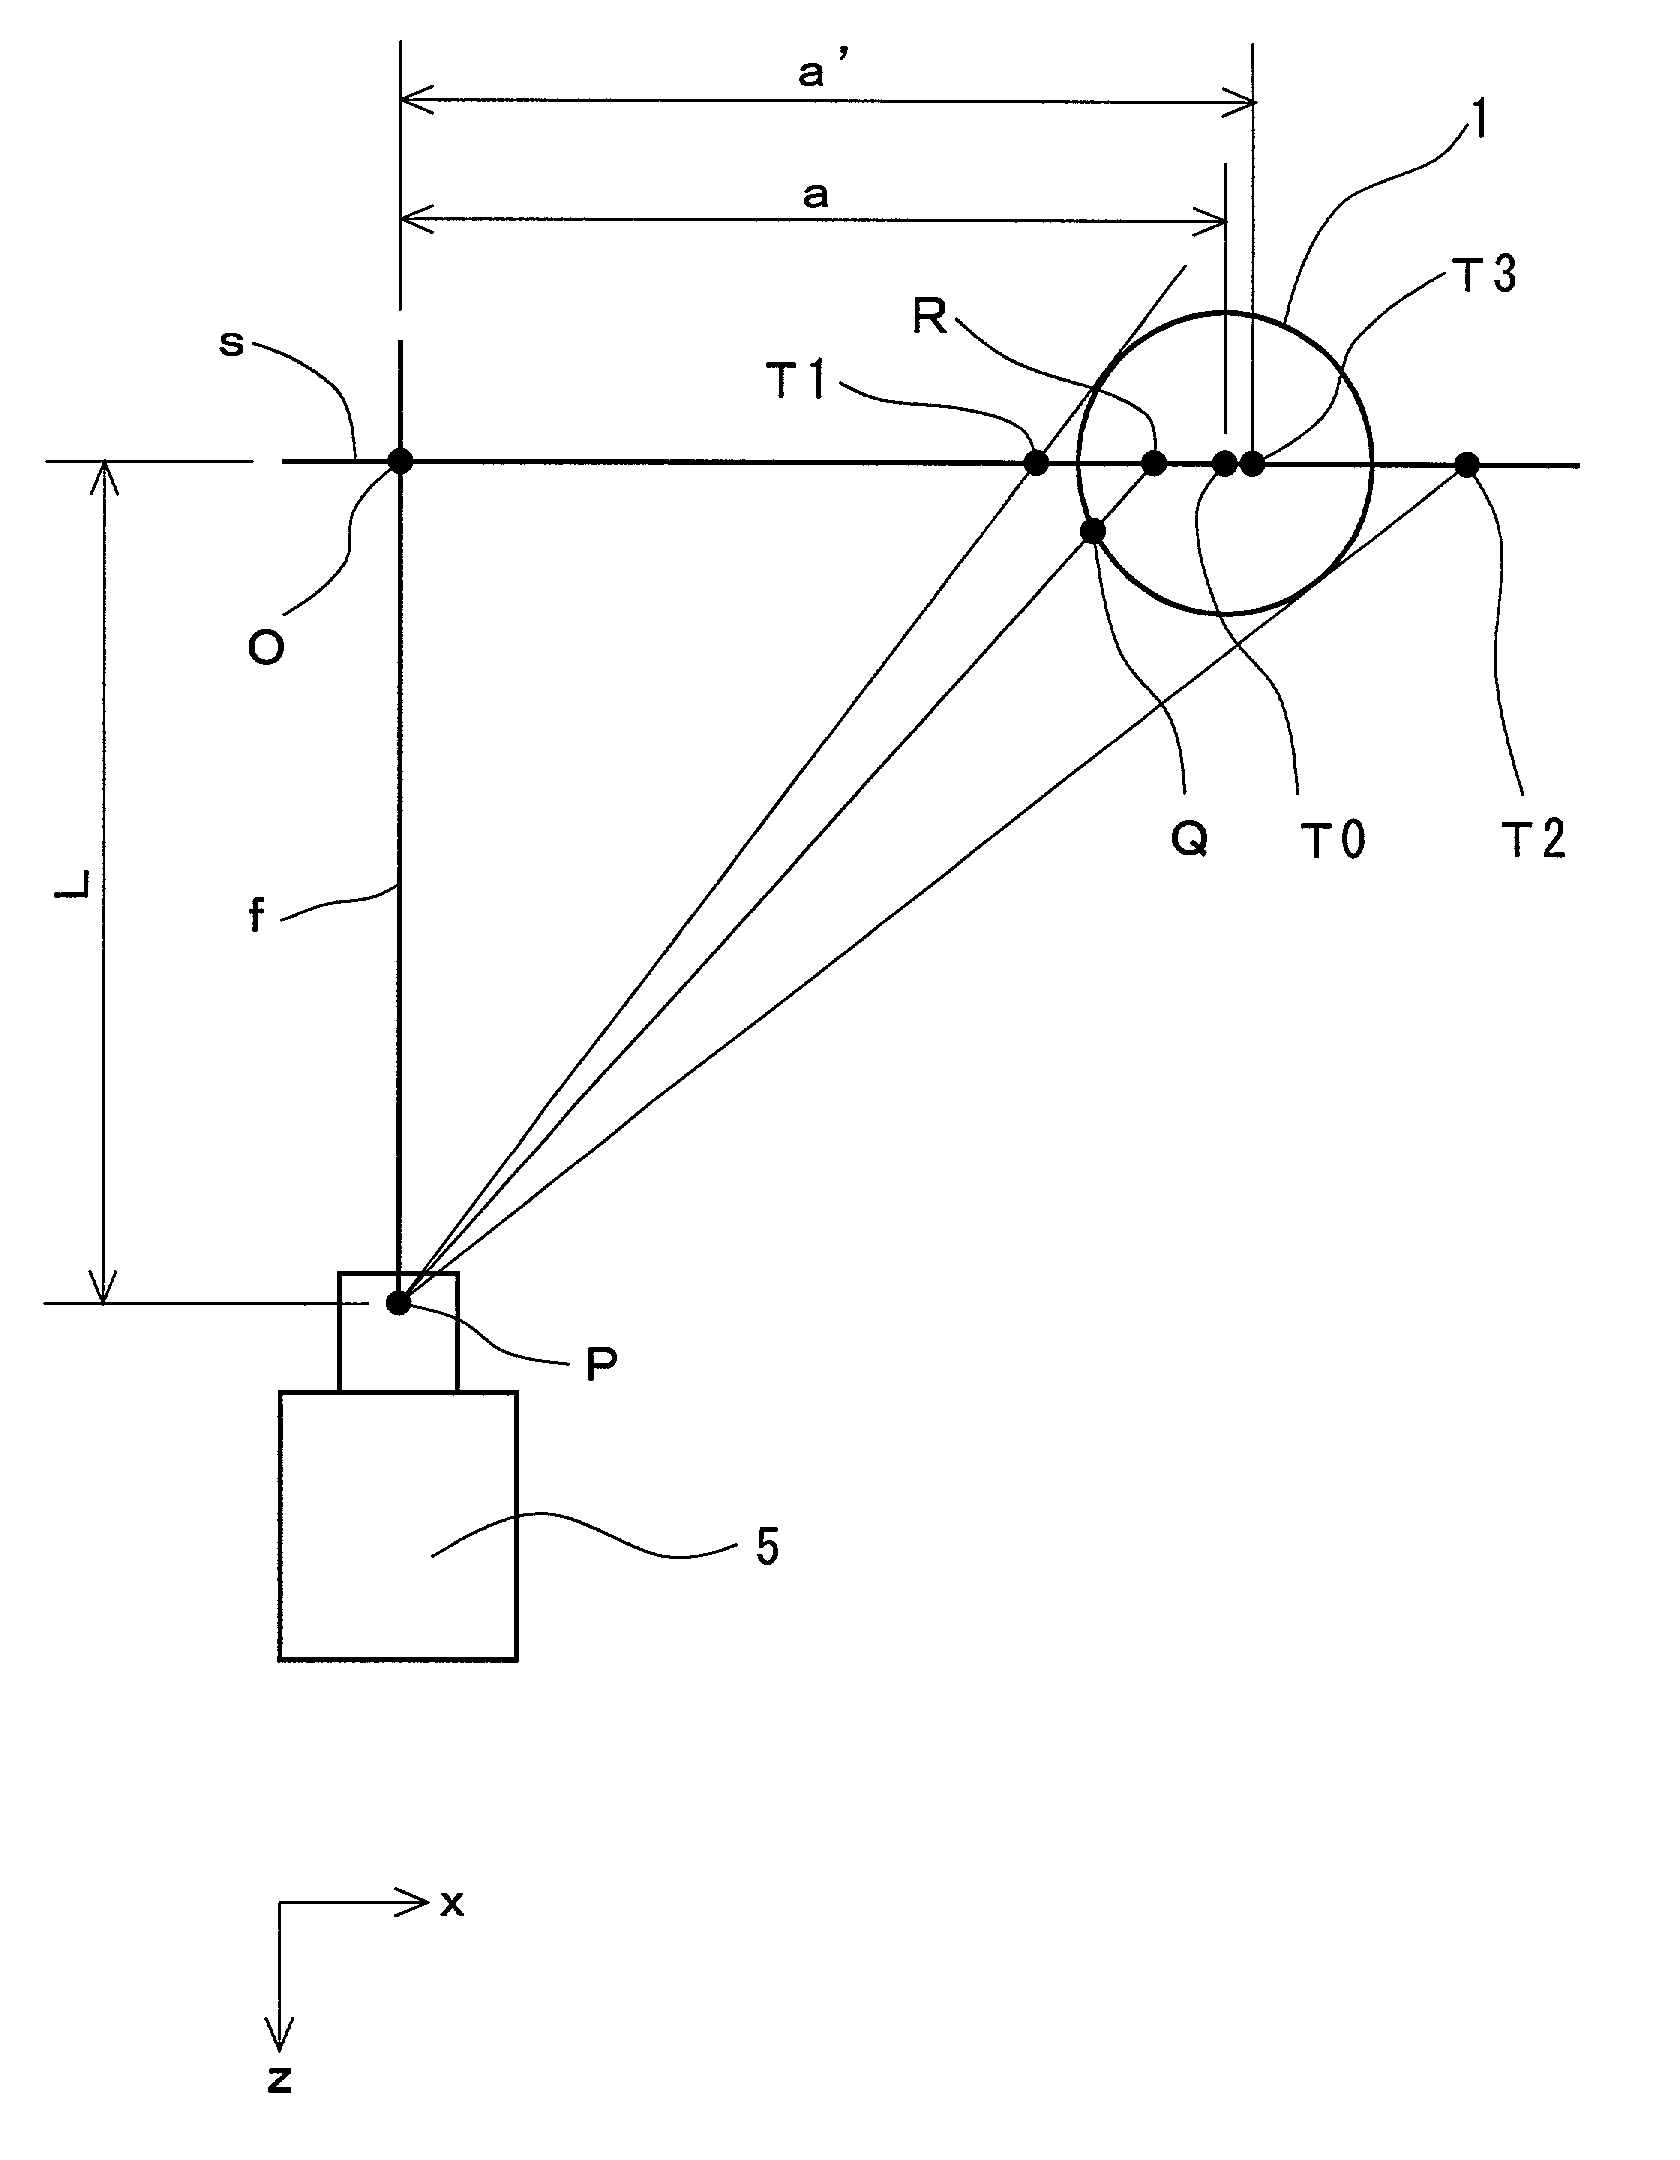 Ball motion measuring apparatus